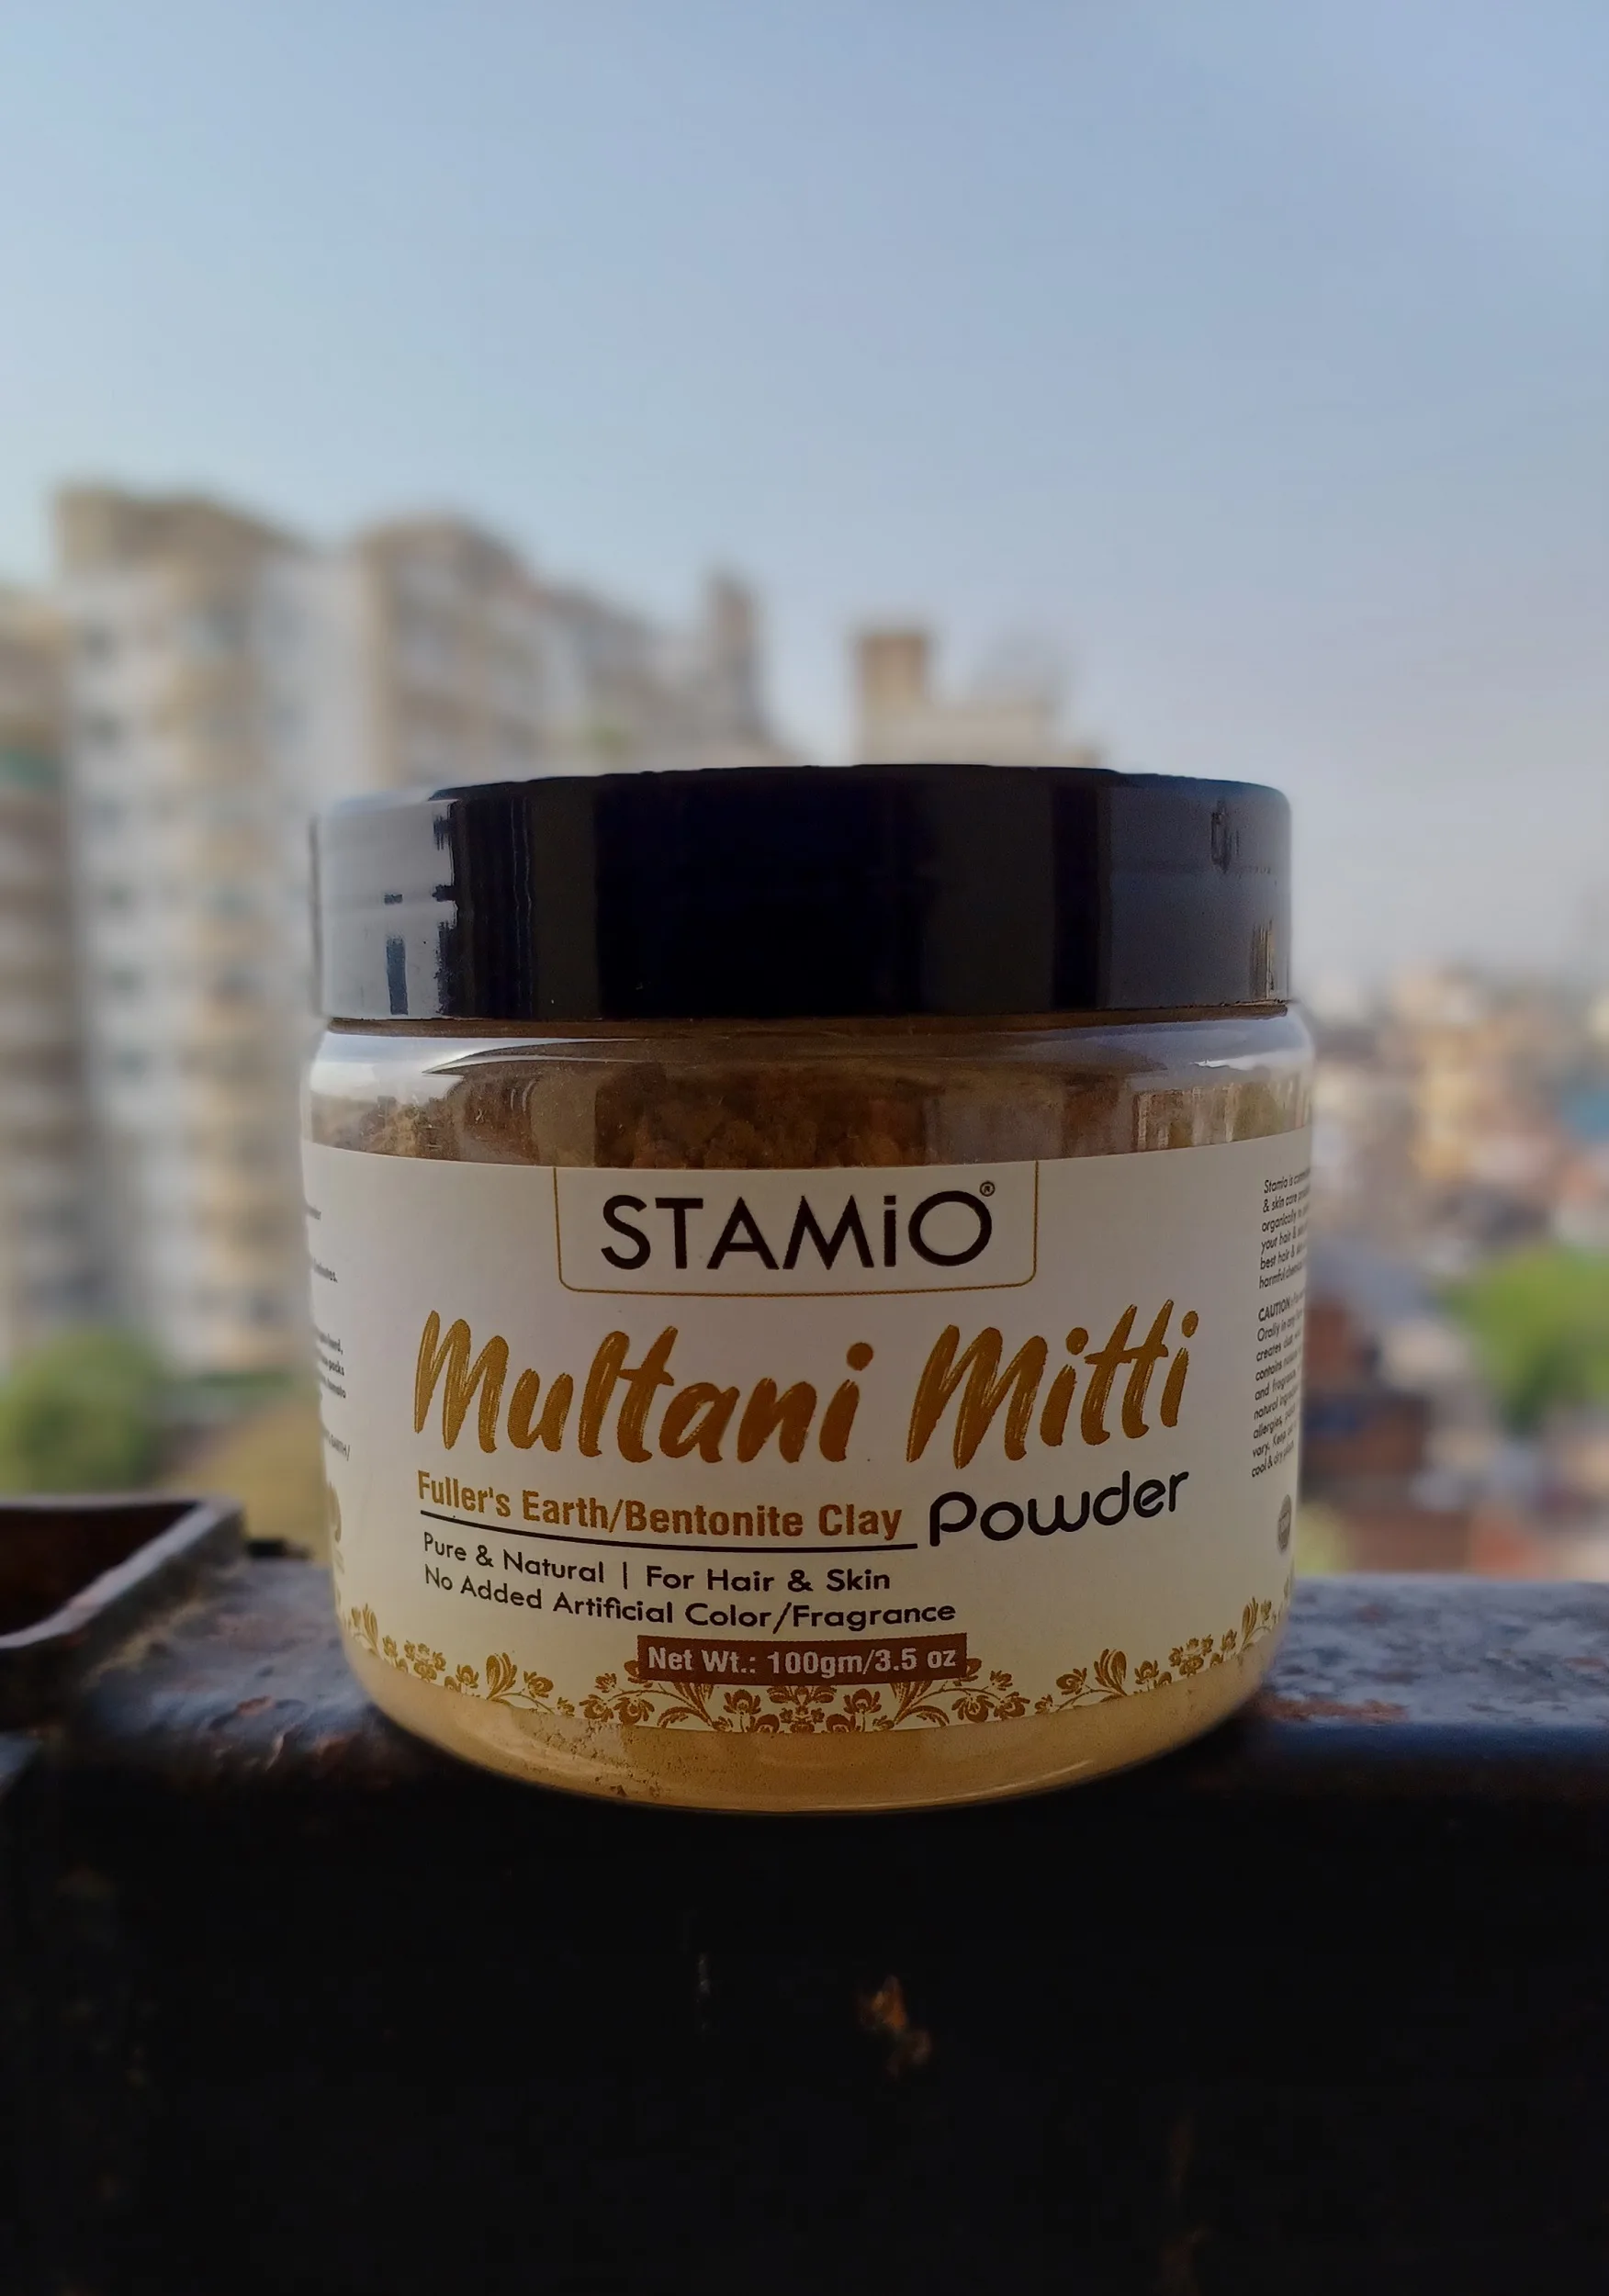 Stamio Multani Mitti Powder Review